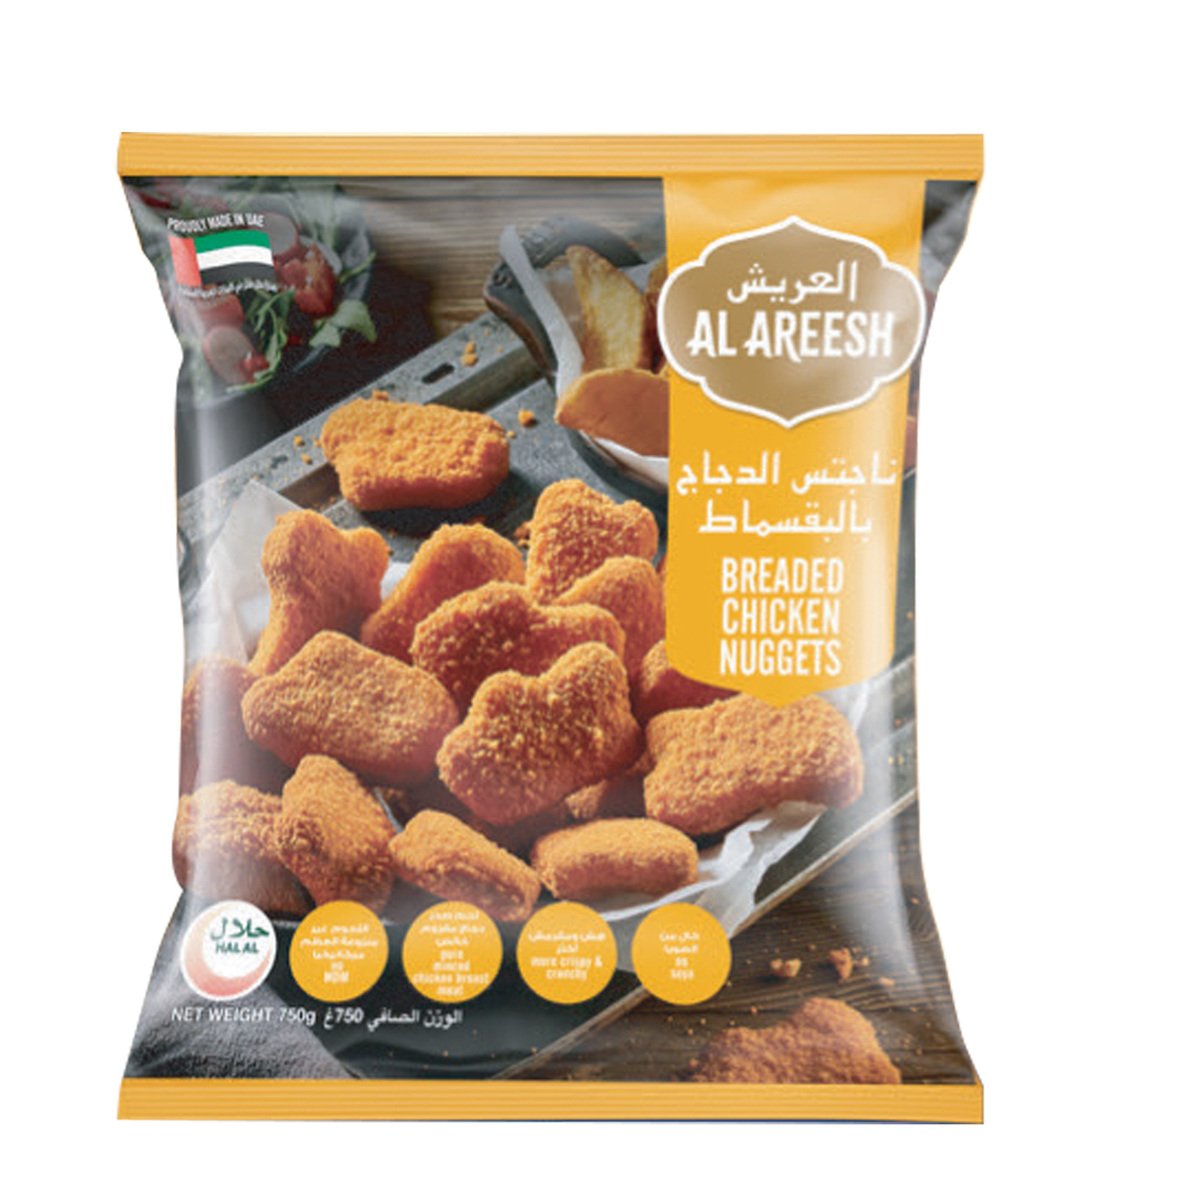 Al Areesh Breaded Chicken Nuggets Value Pack 750 g